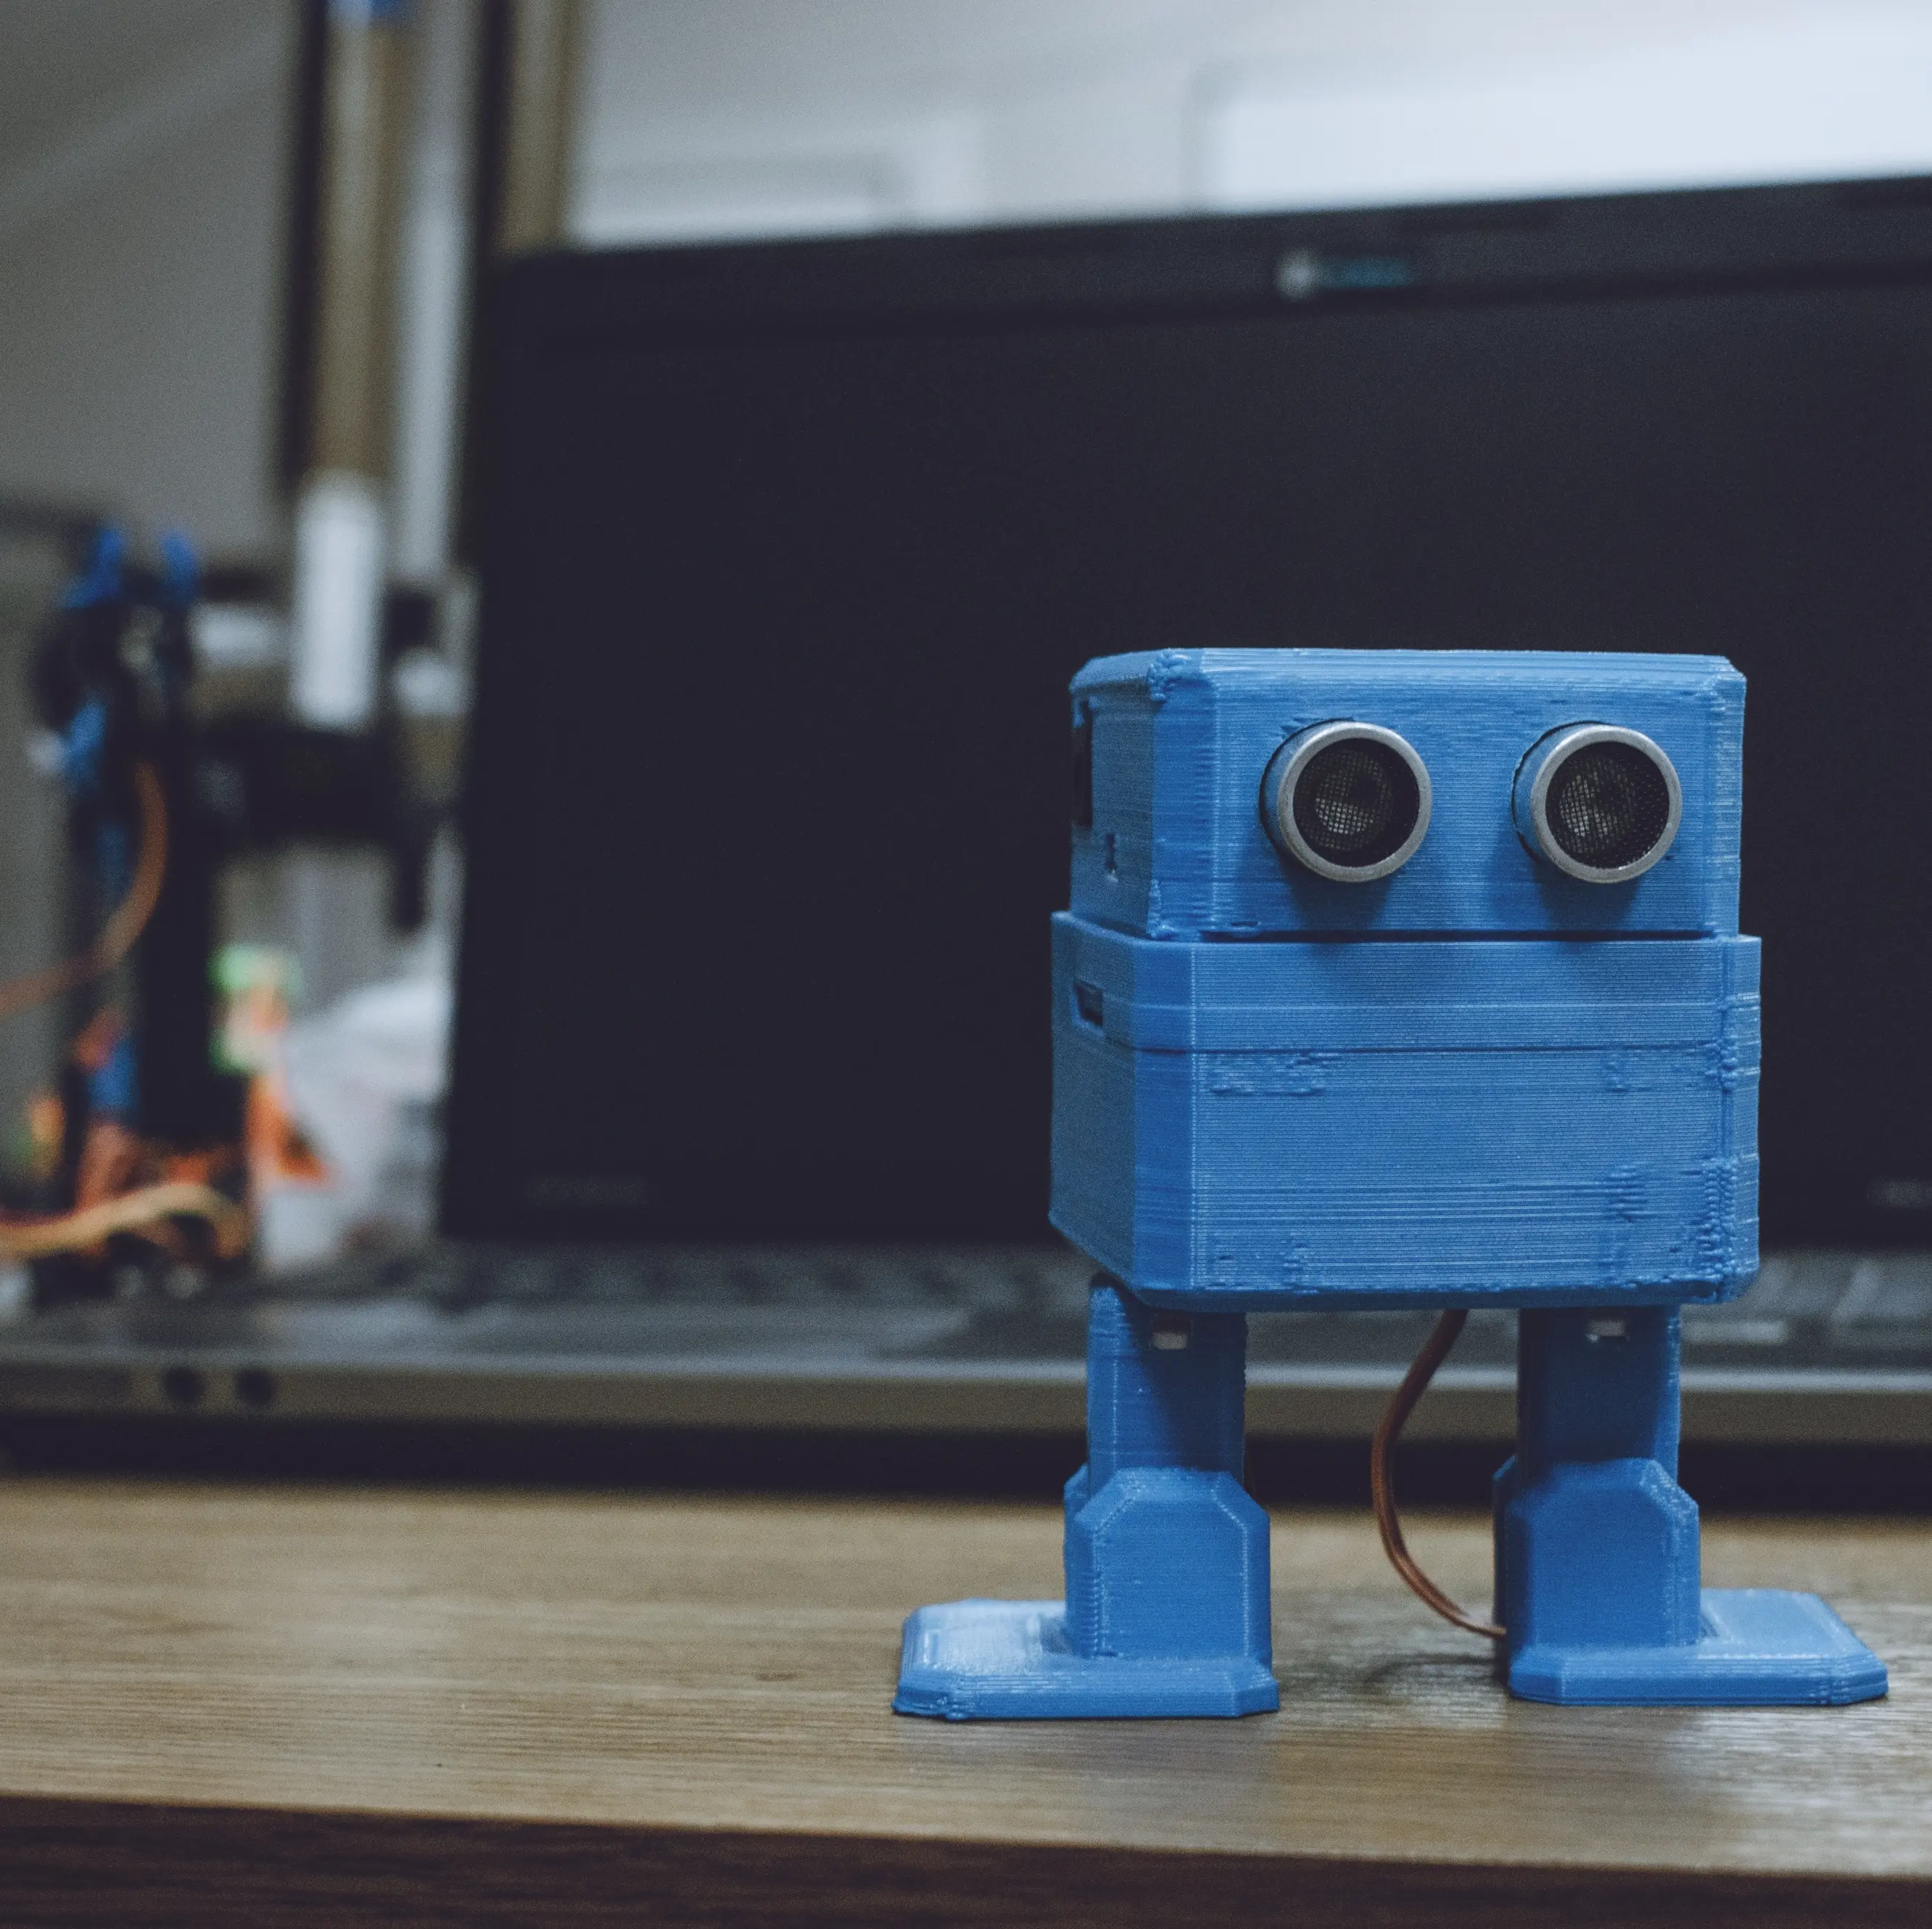 Small blue robot in front of laptop. Credit: @Irrmago via Twenty20